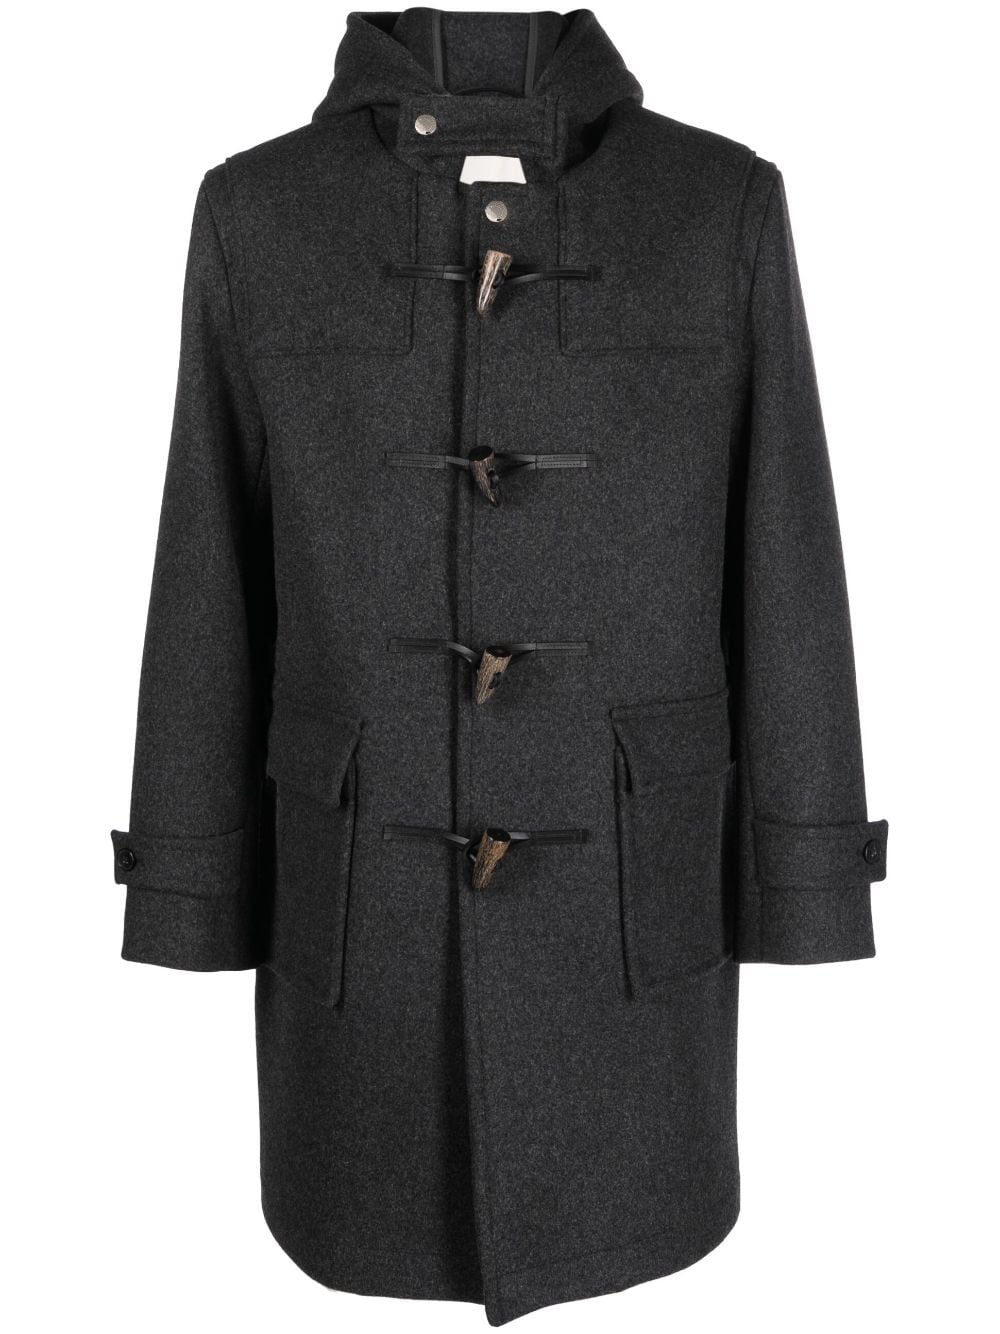 Weir hooded wool duffle coat